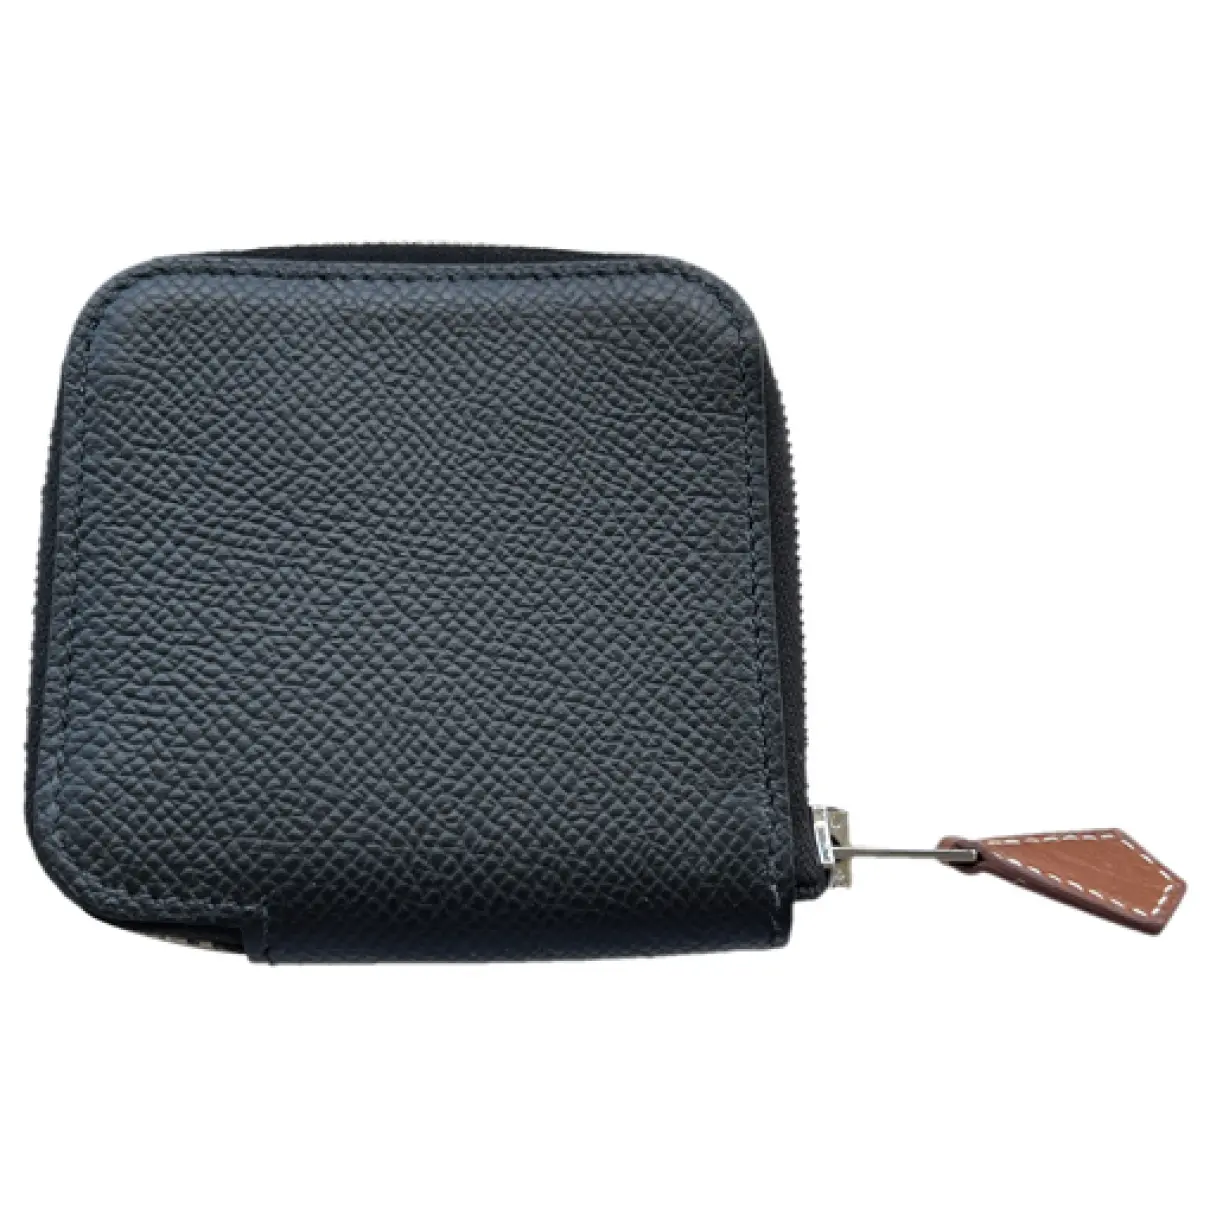 Silk'in leather purse